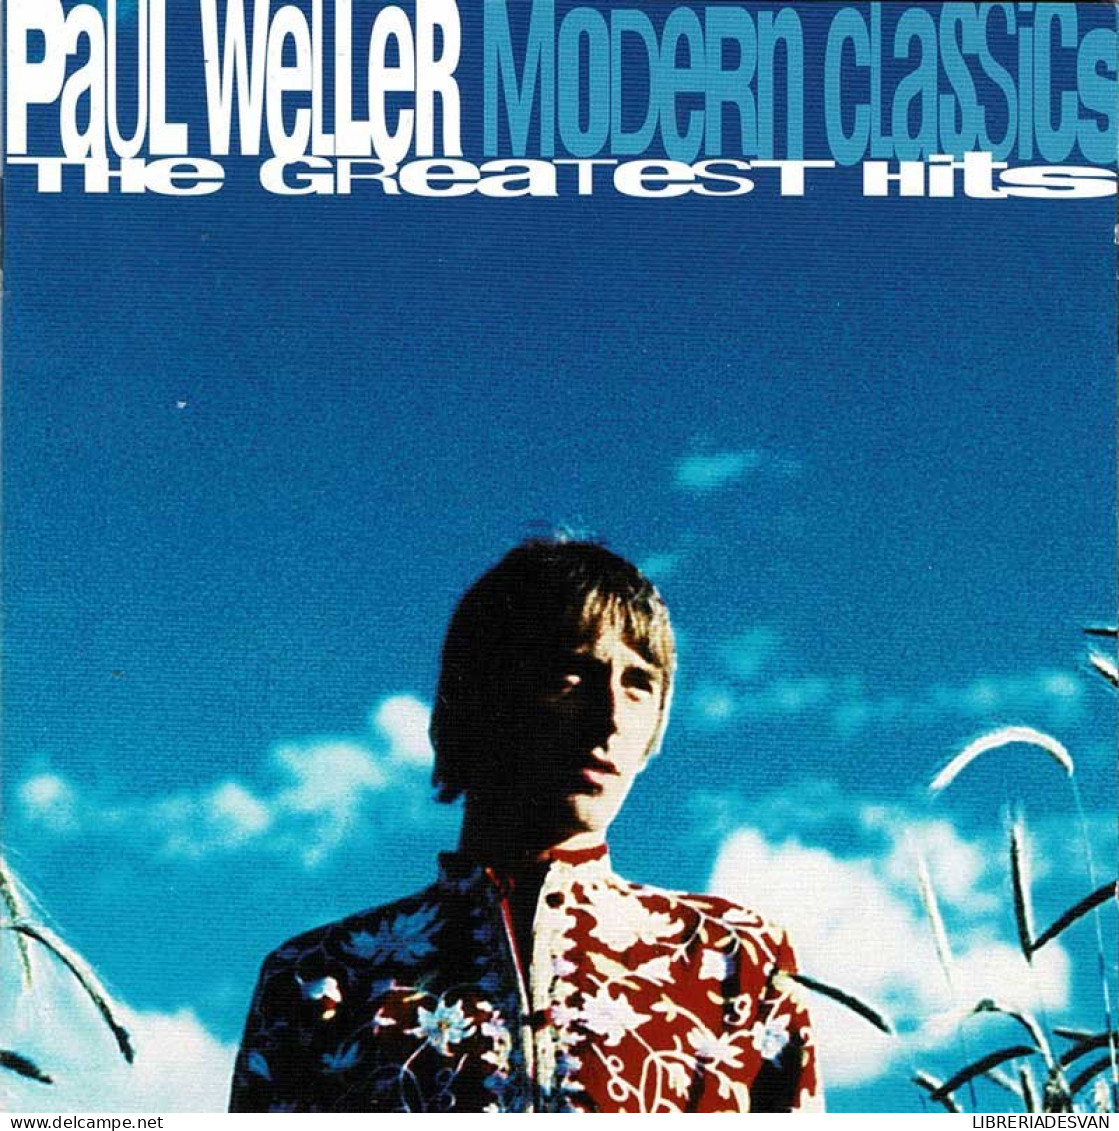 Paul Weller - Modern Classics - The Greatest Hits. 2 X CD - Rock